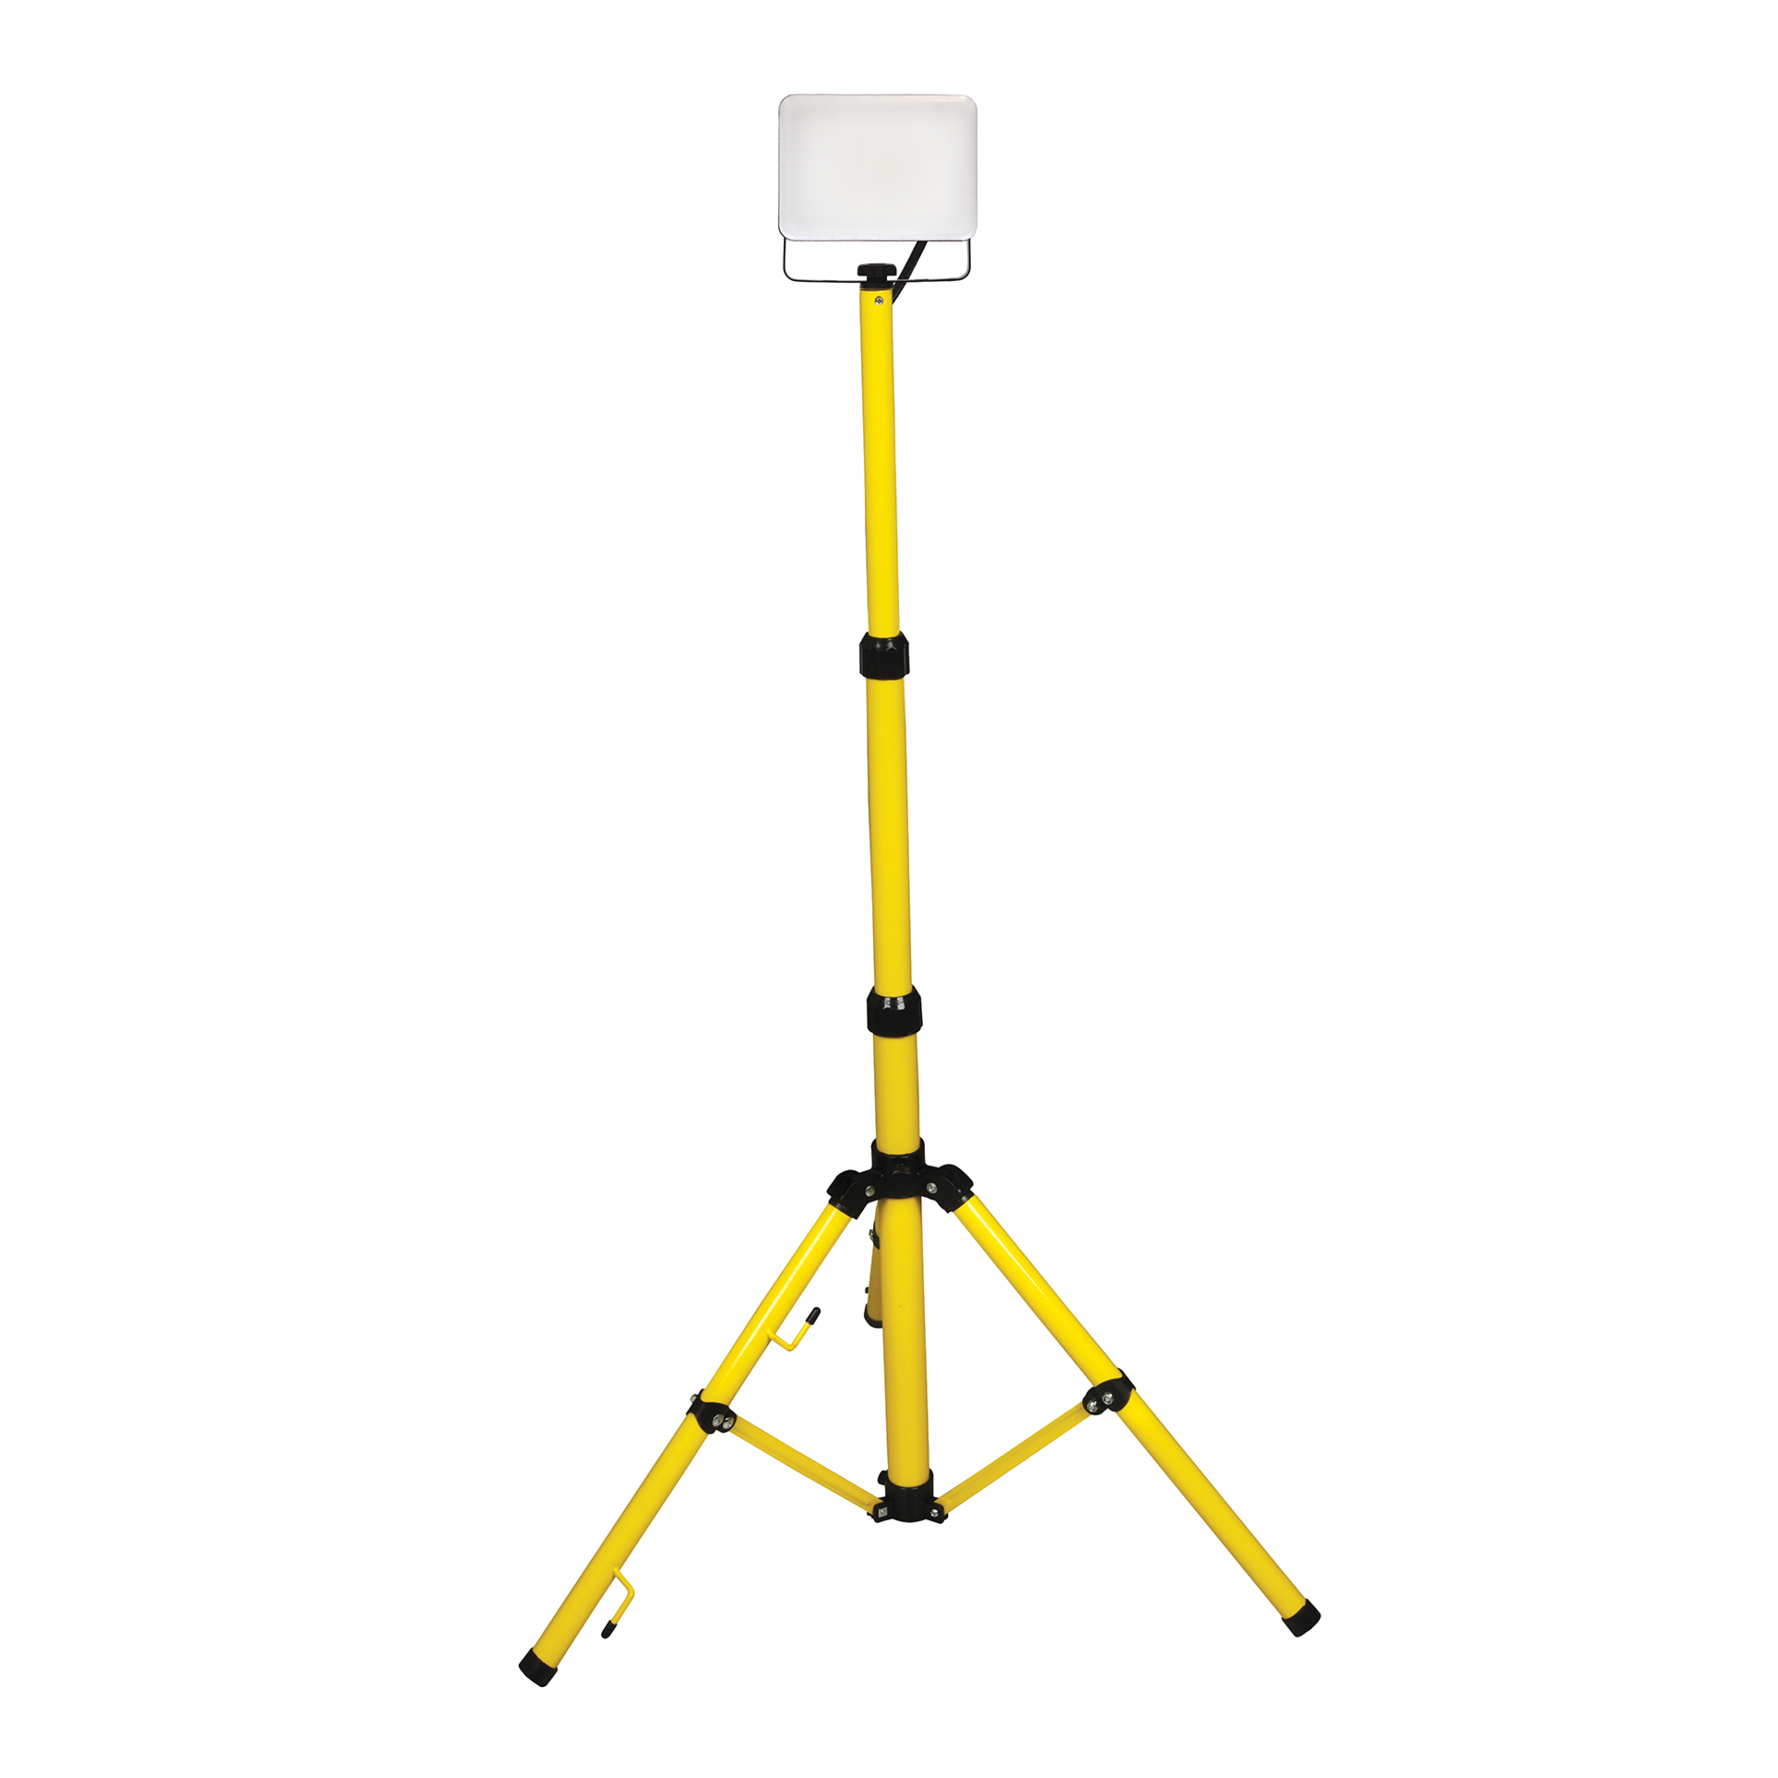 Slika COMMEL LED reflektor na stativu,308-433, 30W, 6500K, 1x3200Im, crni, žuti stativ